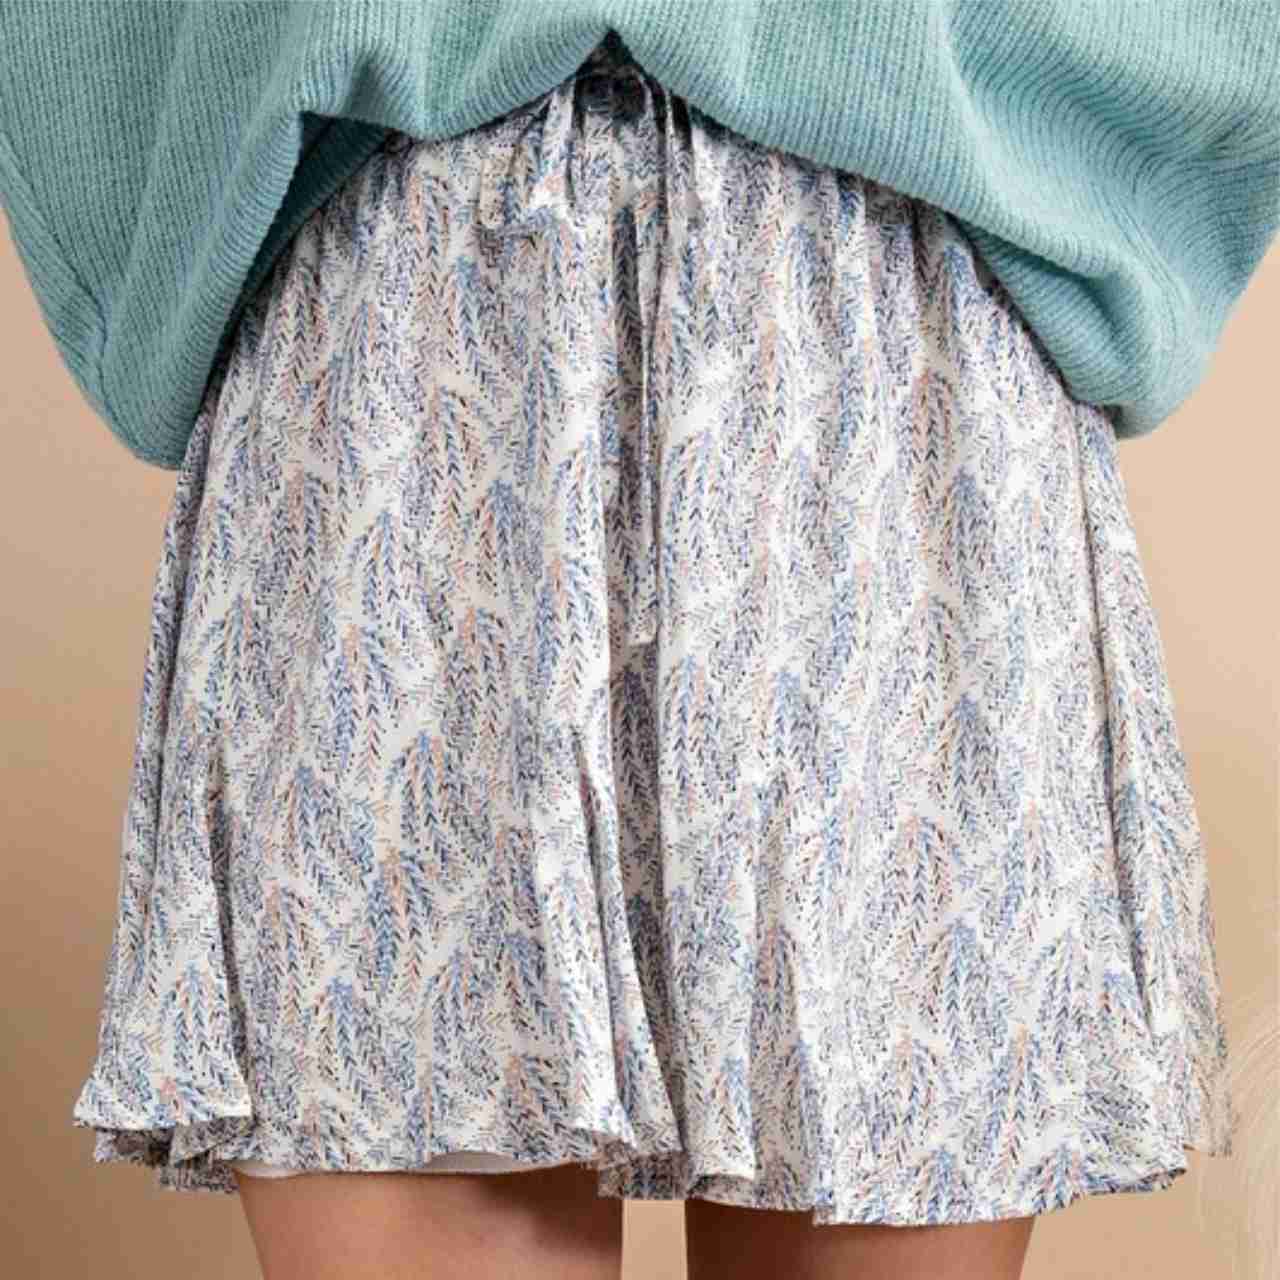 Everly Flared Bottom Mini Skirt - The Graphic Tee